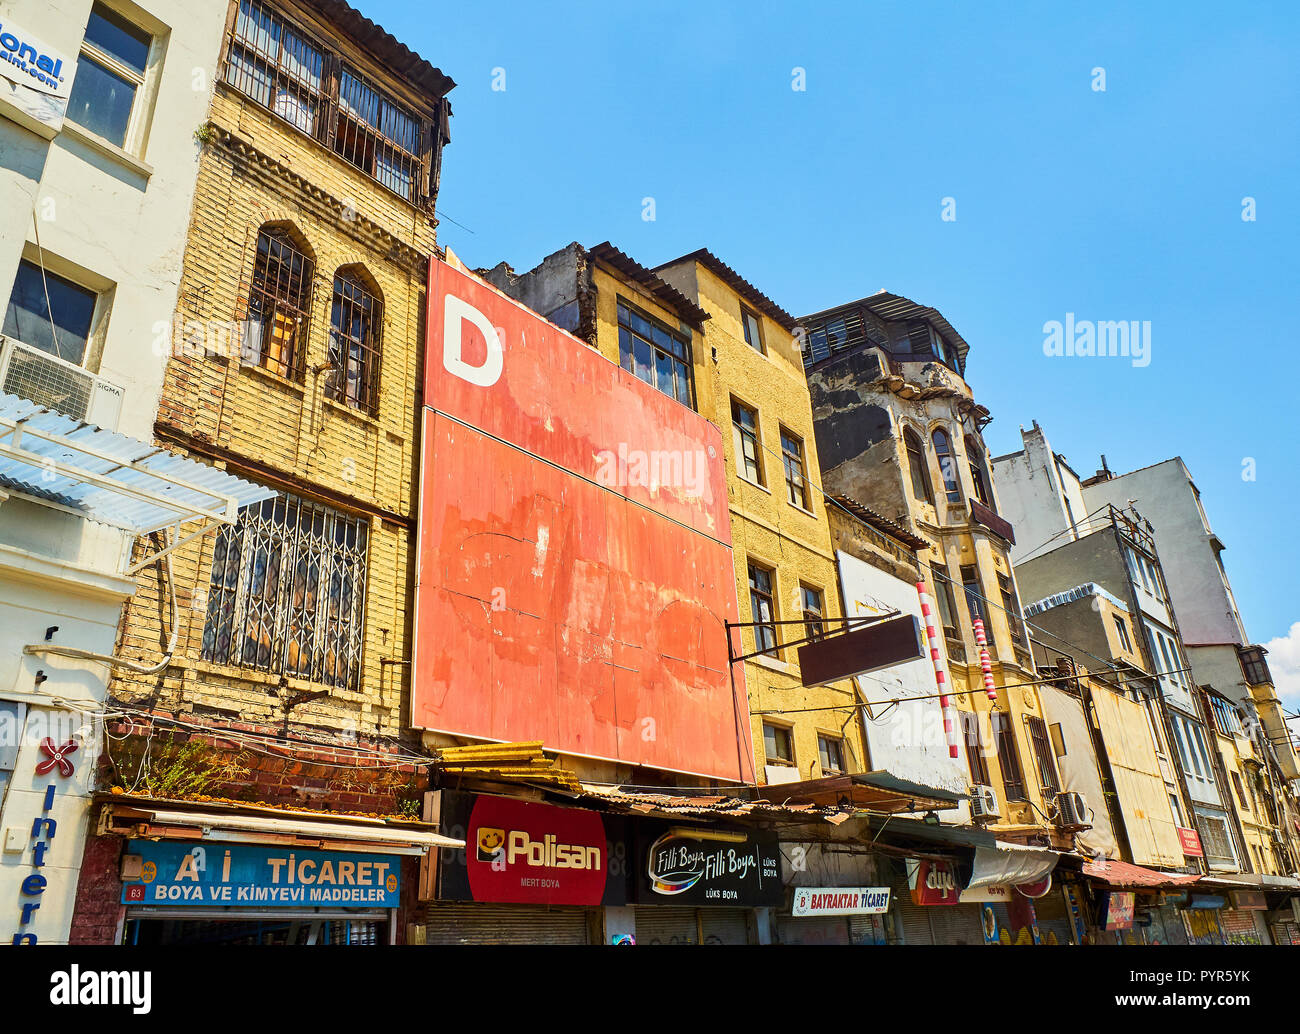 Typical buildings of the Fermeneciler street, Karakoy district. Istanbul, Turkey. Stock Photo